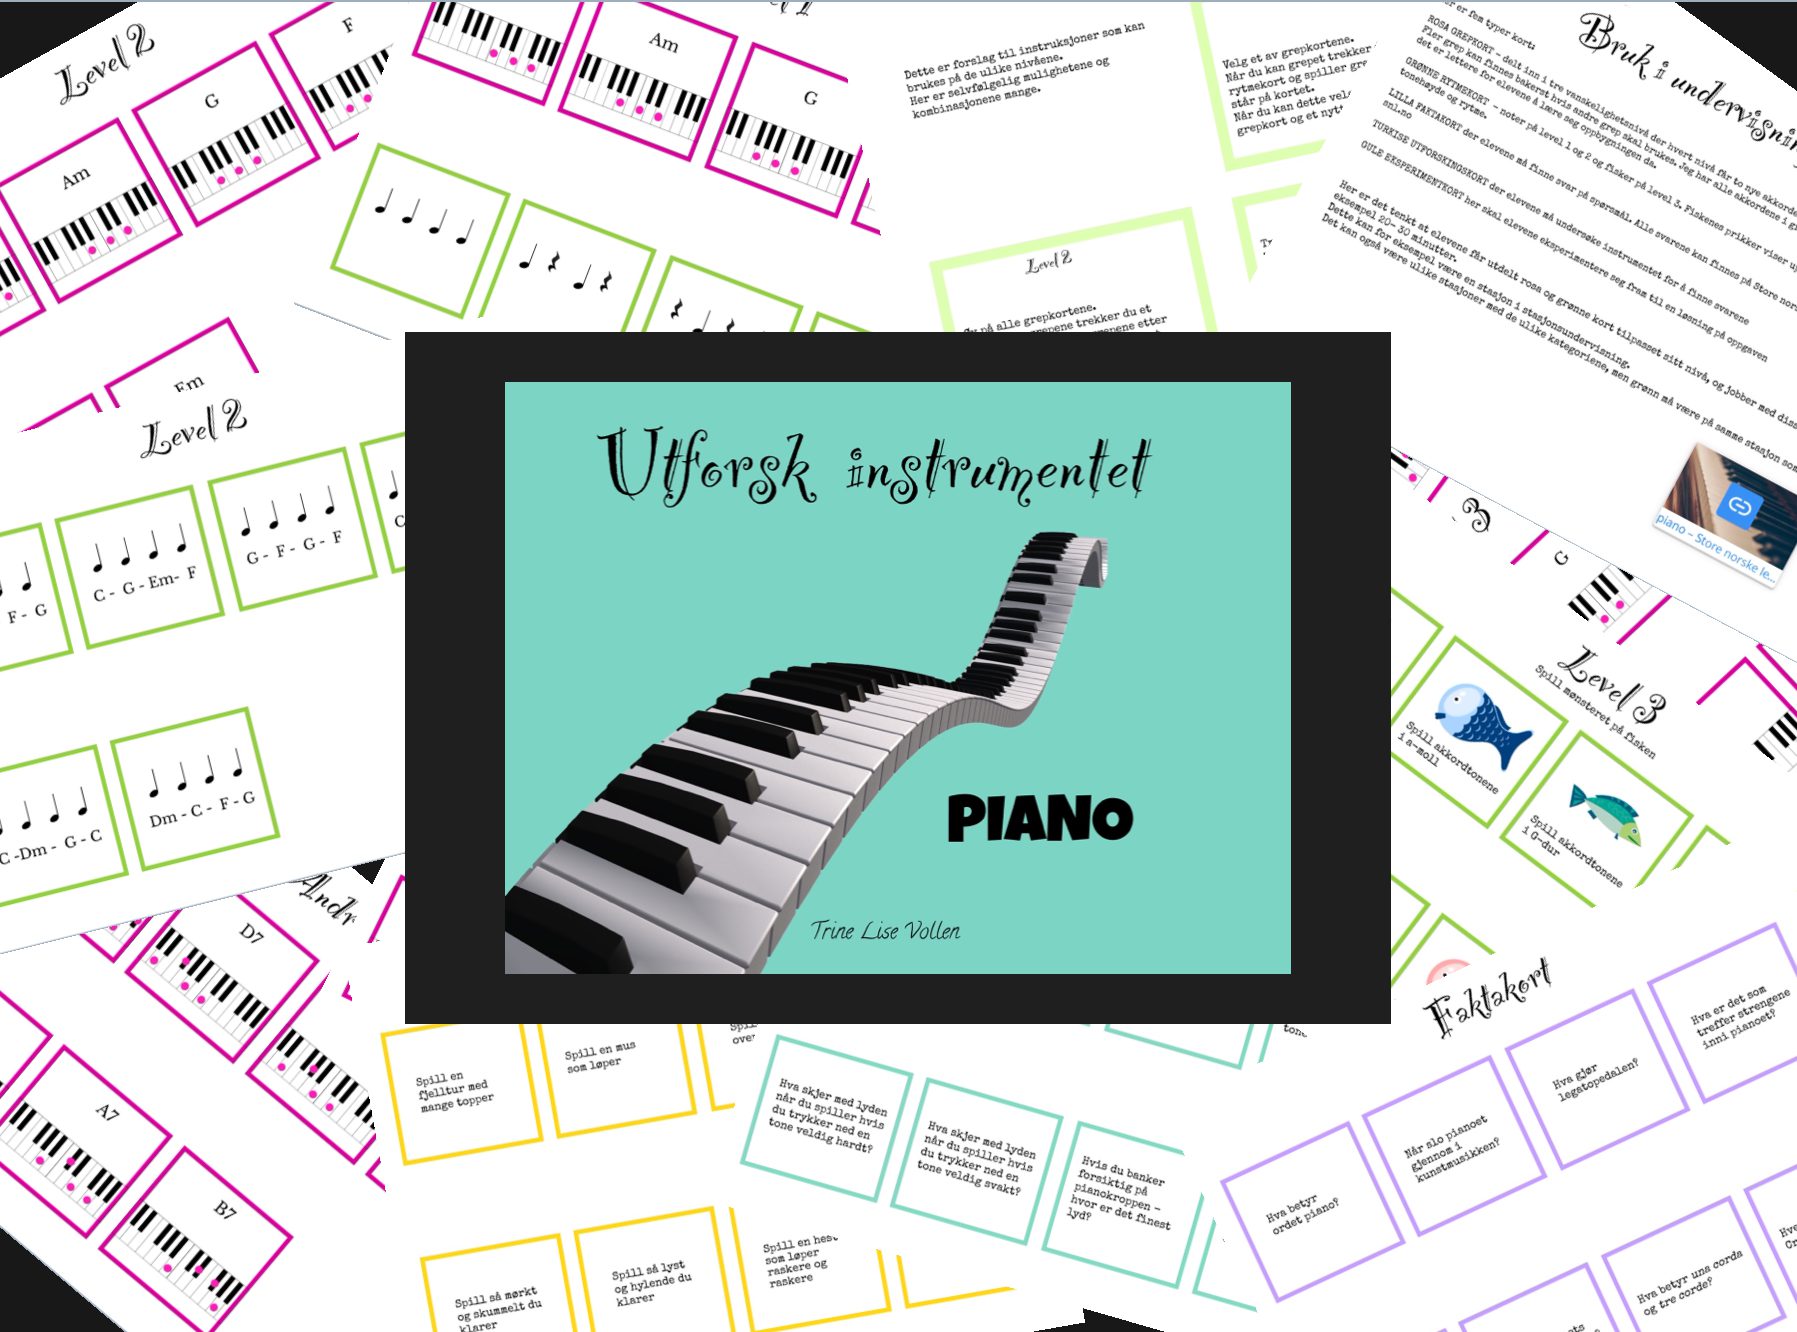 Utforsk instrumentet PIANO